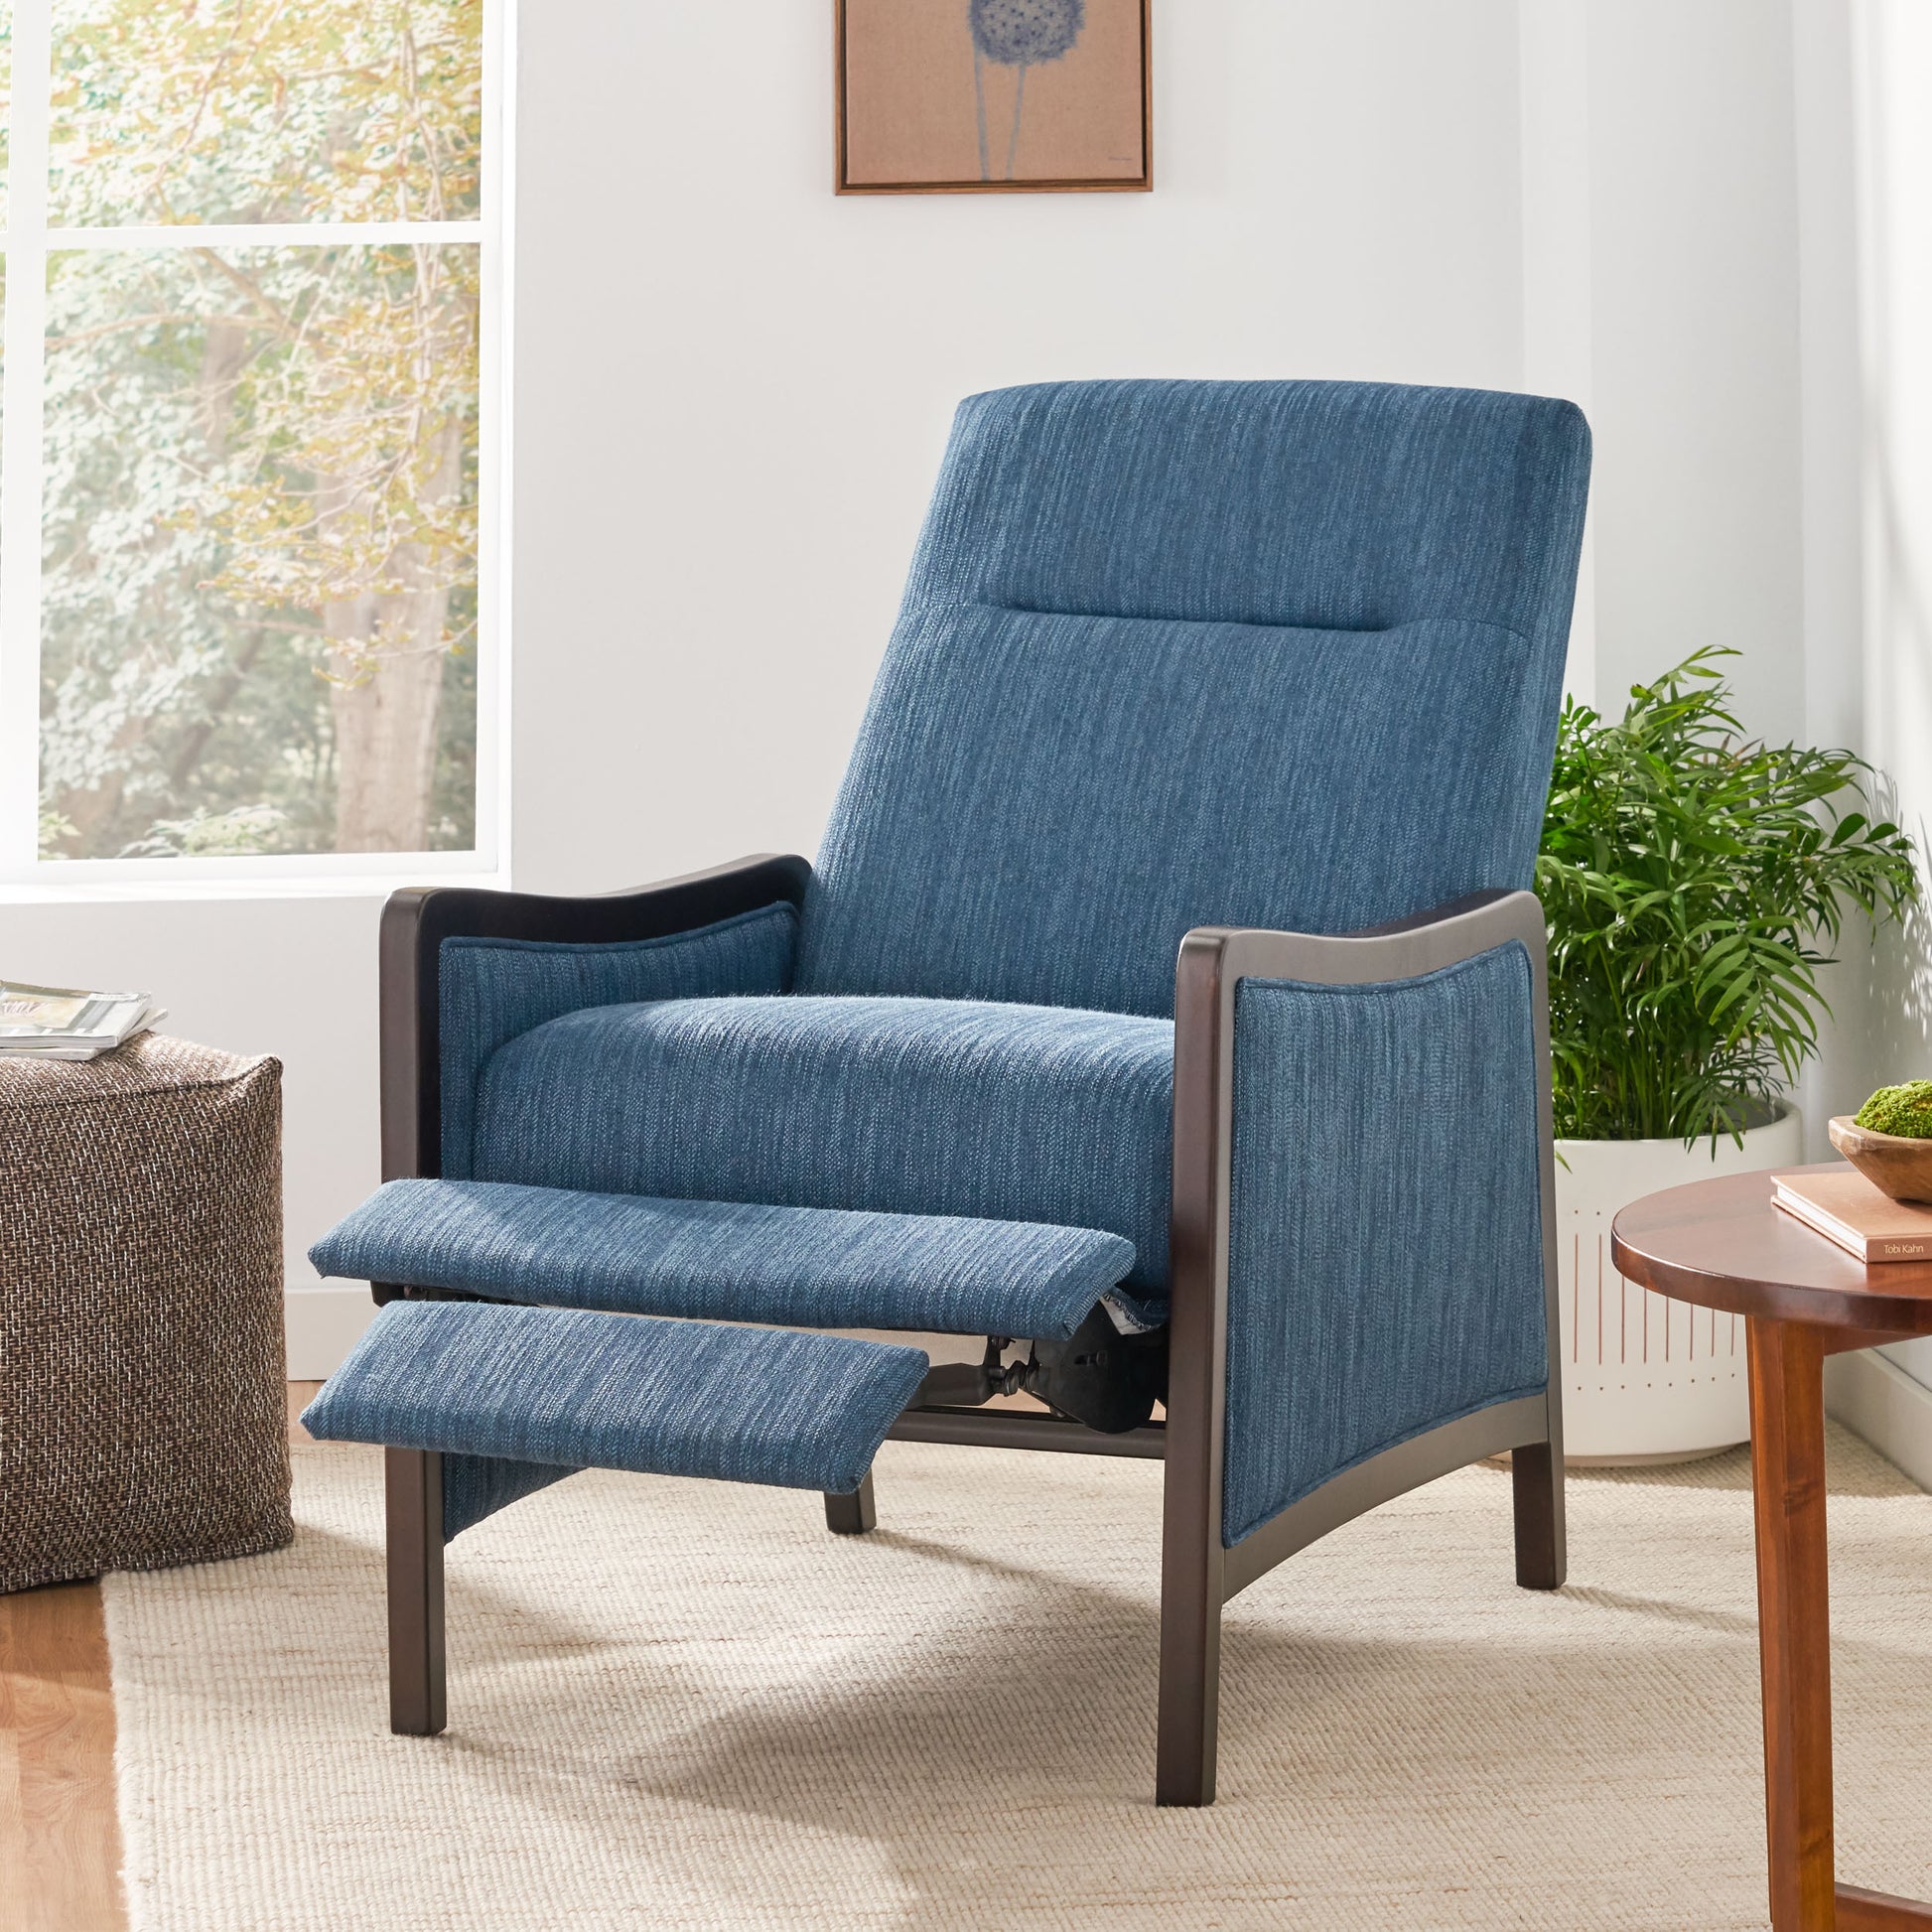 Recliner Chair - Navy Blue Fabric